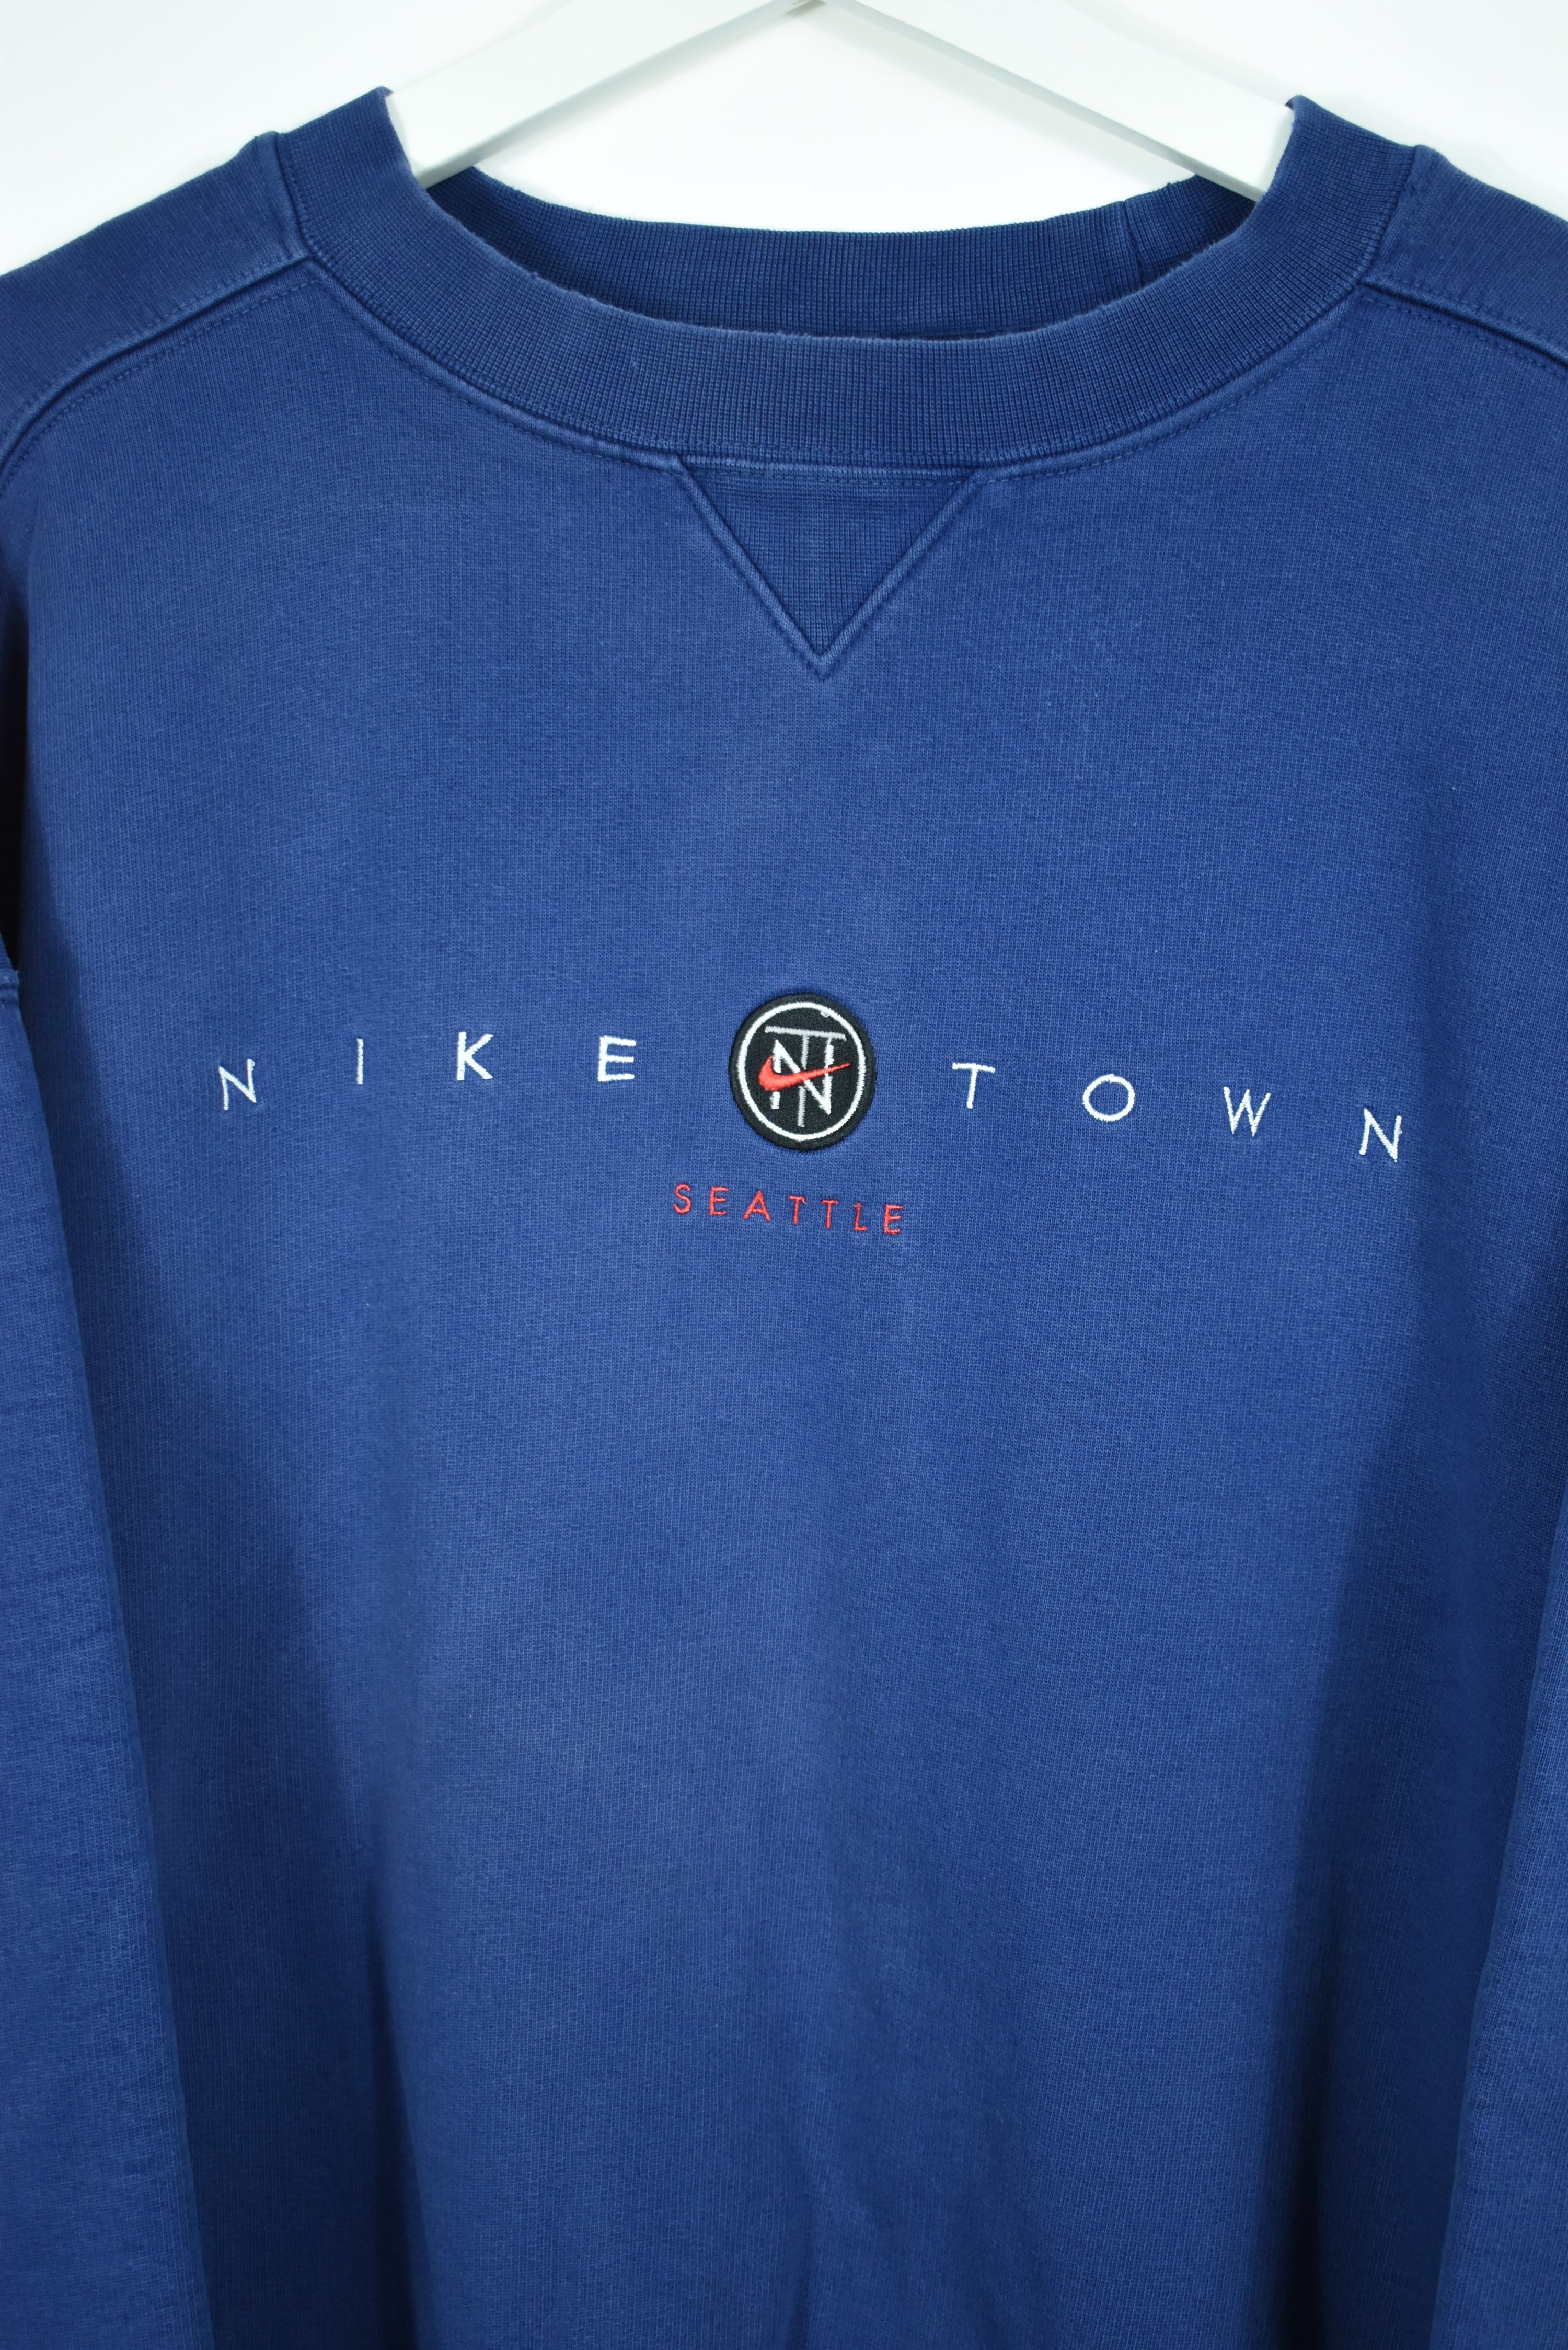 Vintage RARE Nike Town Seattle Embroidery Sweatshirt XLARGE